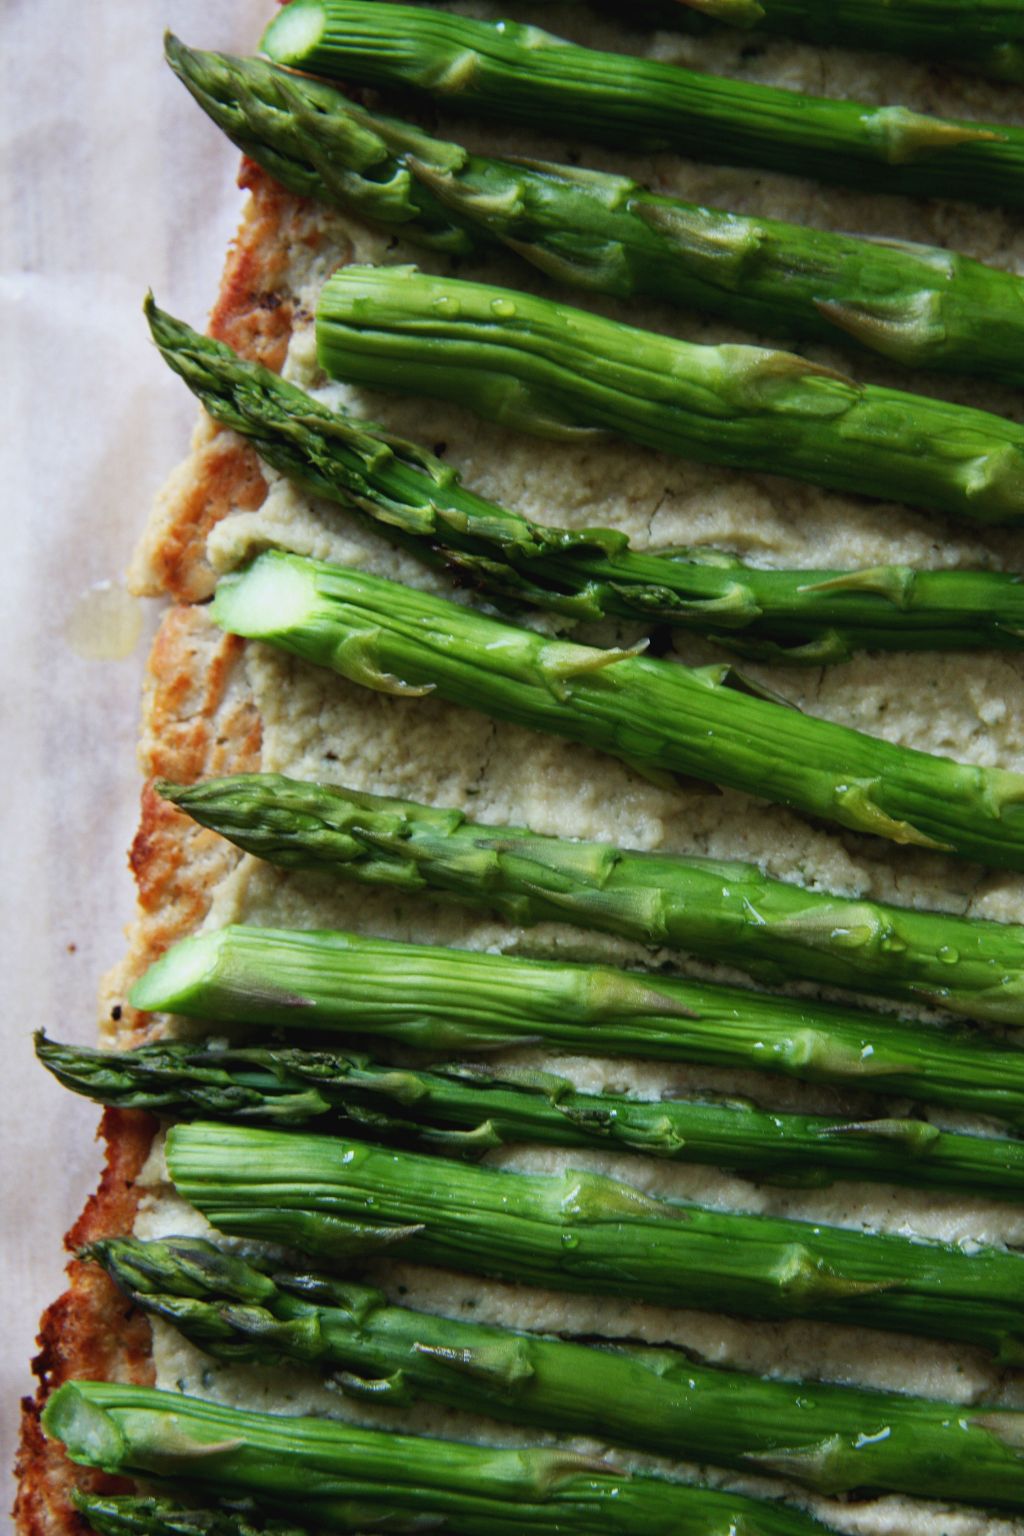 Plant Powered Pizzas – “Asparagus Pizza on Cauliflower Crust”